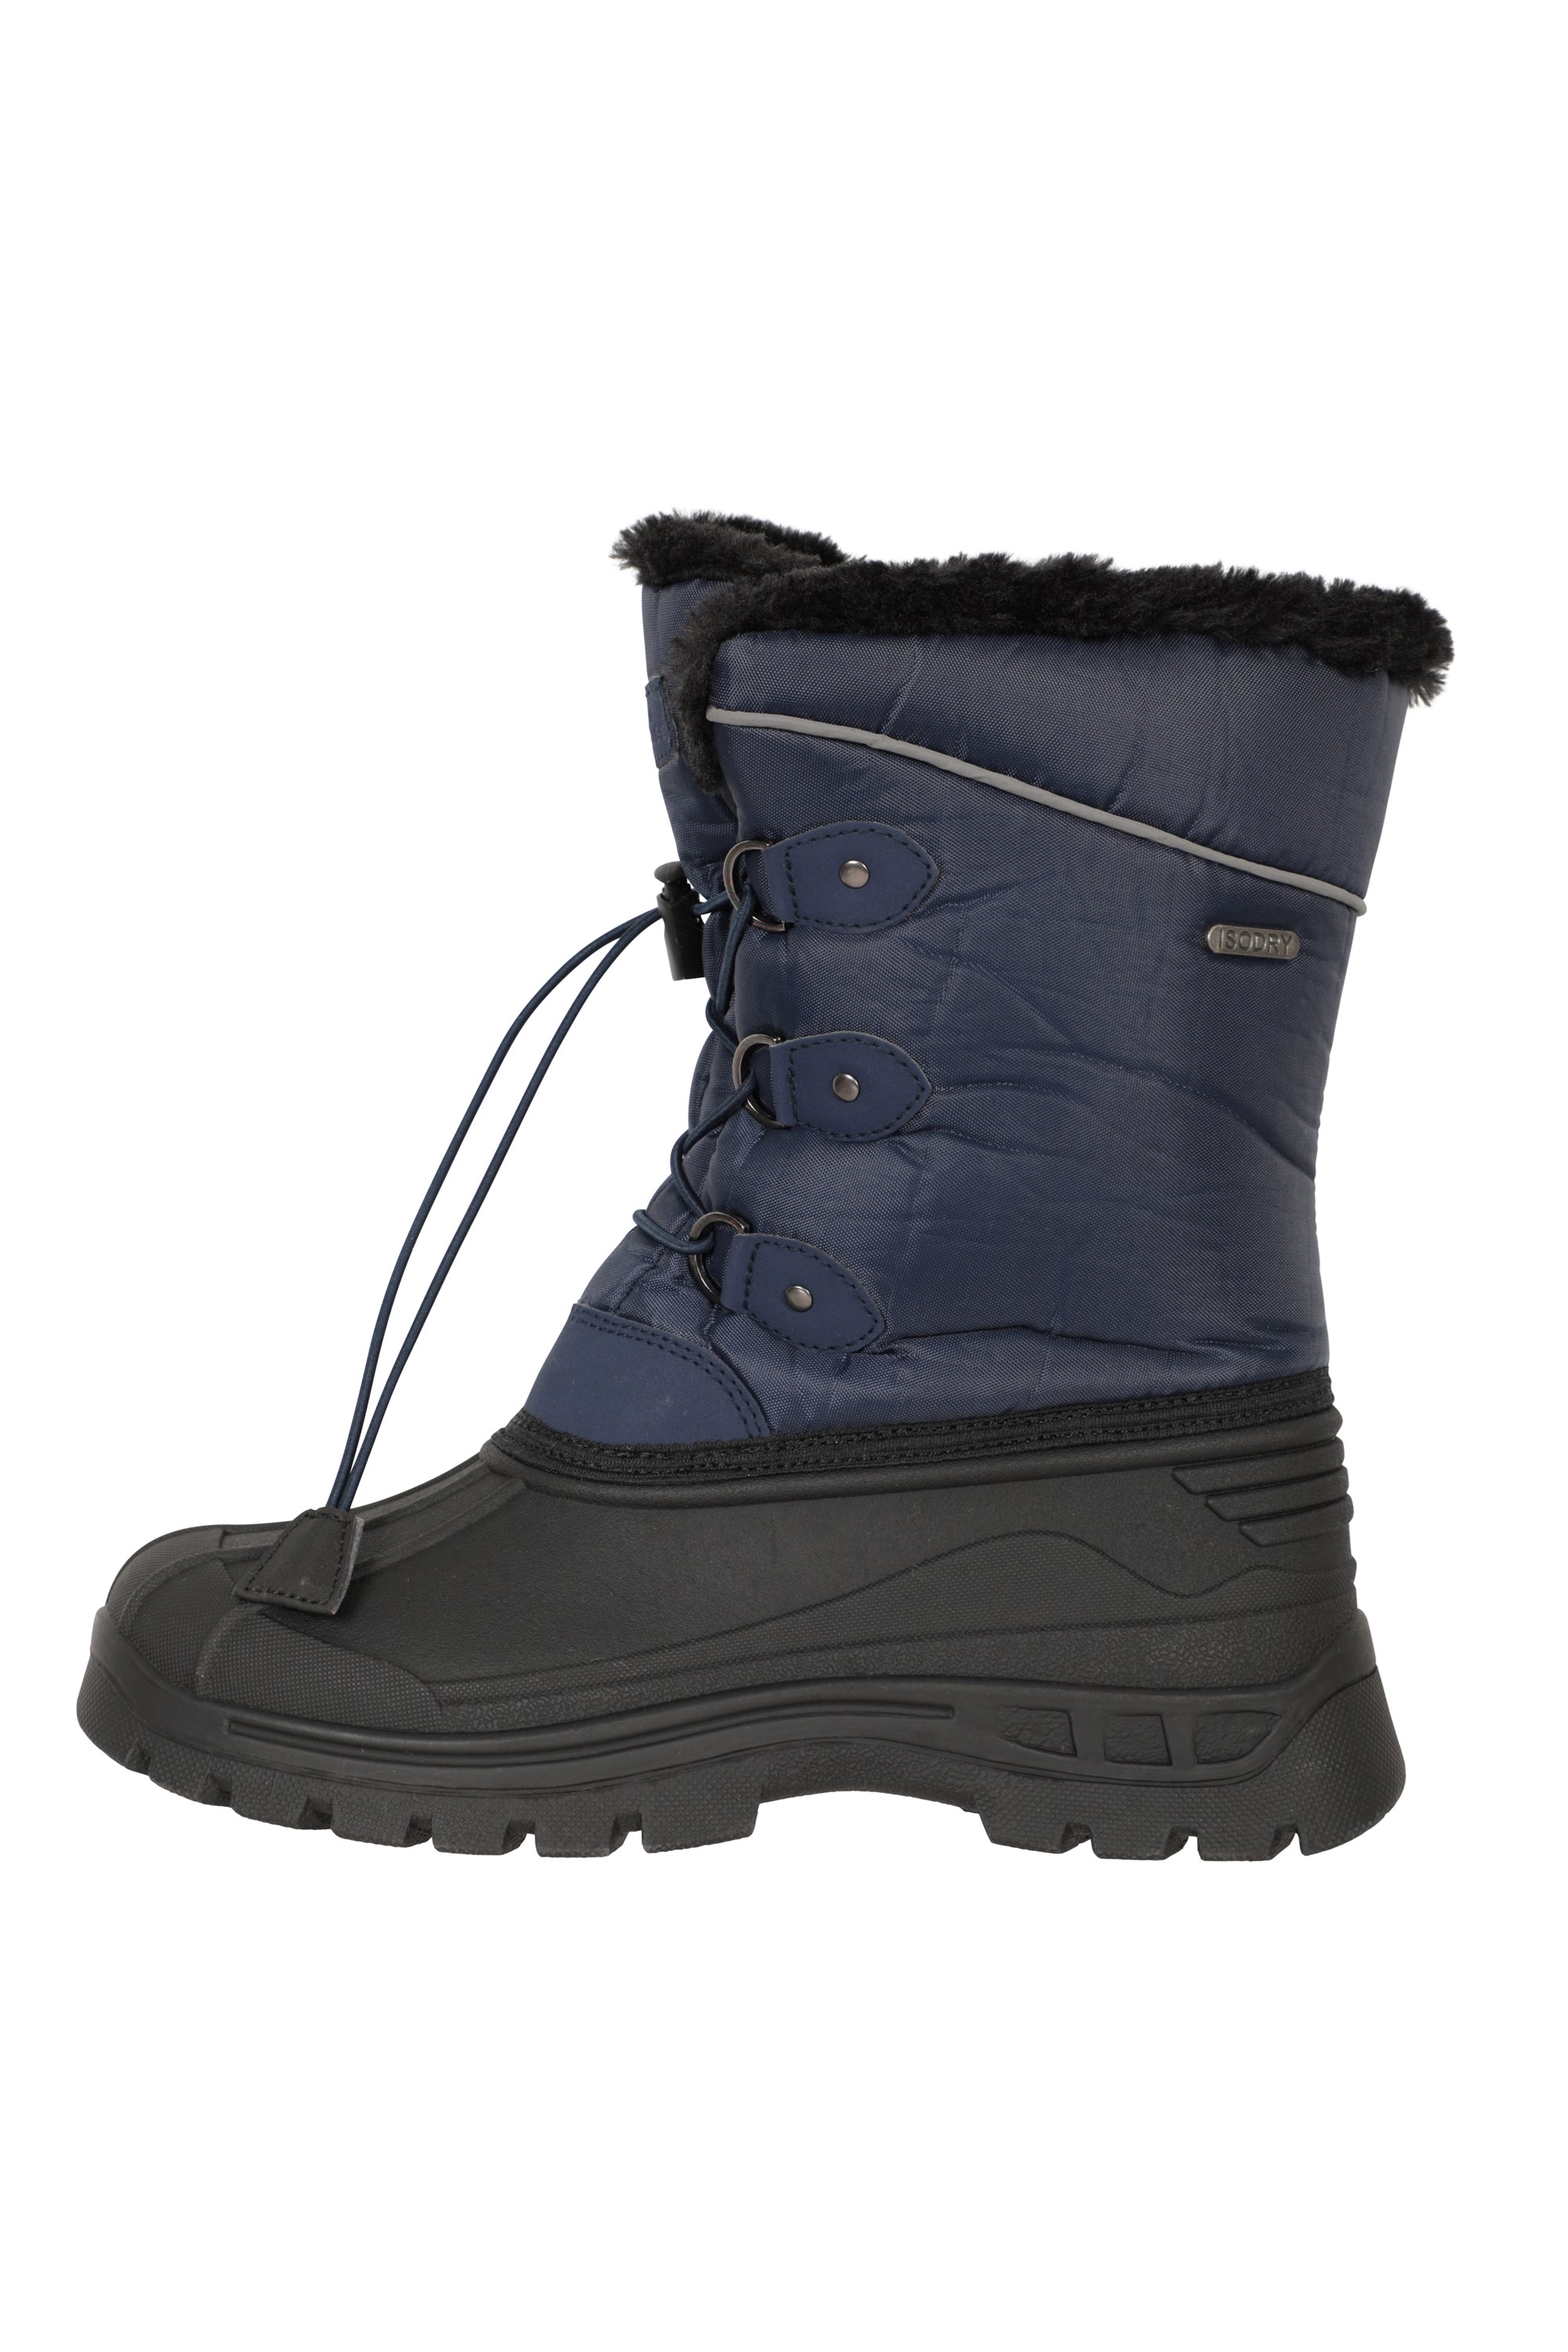 Mountain Warehouse Mountain Warehouse Snow Boots Kids Size 8 Alpine Junior Waterproof Fleece Lined 